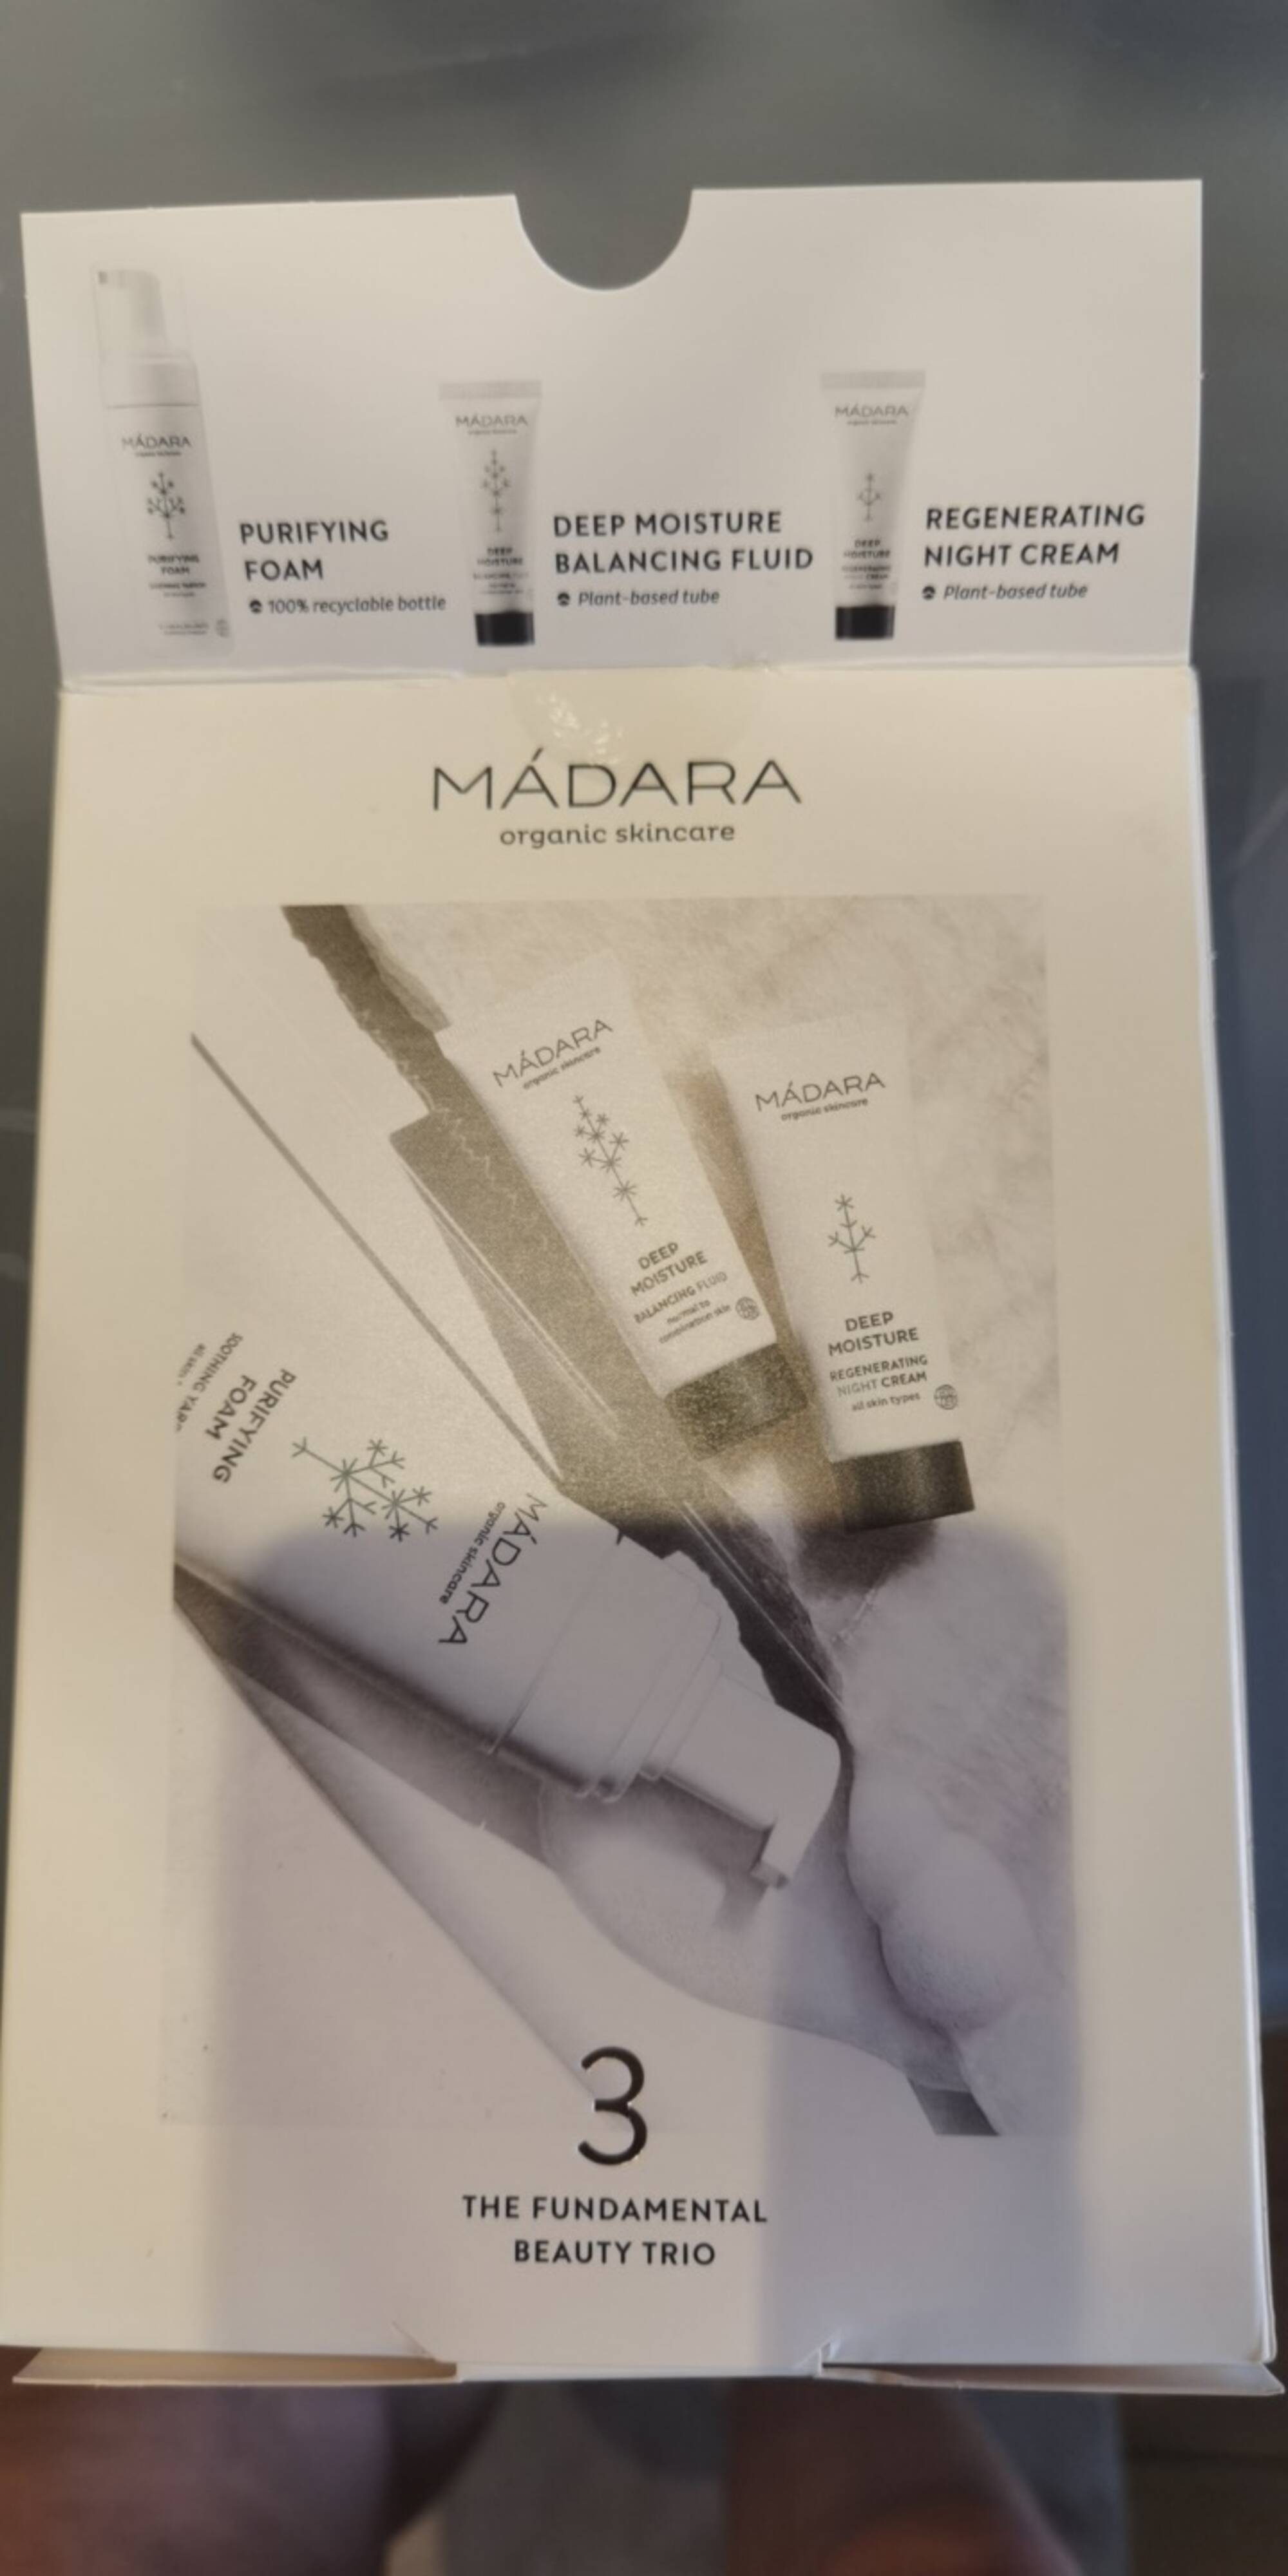 MÁDARA - The fundamental beauty trio